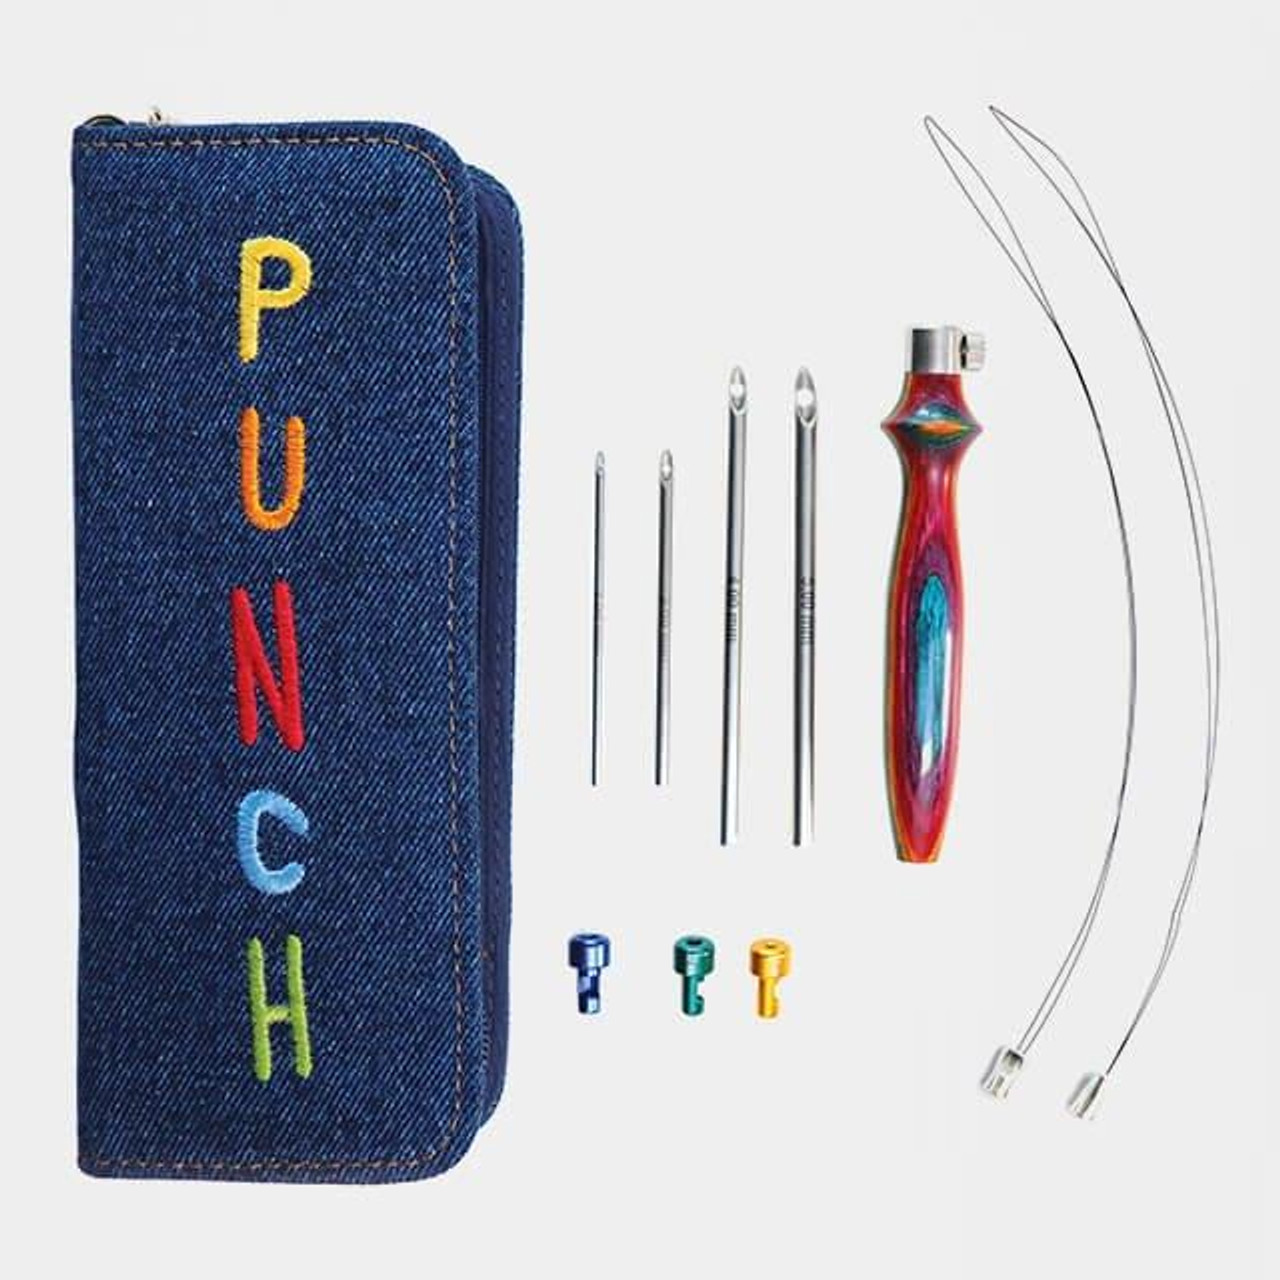 Adjustable Wooden Punch Needle, Punch Needles Start Kit, Beginner Punch  Needle Kit With Adjustable Punch Needle, Punch Needle Kit With Yarn -   Norway